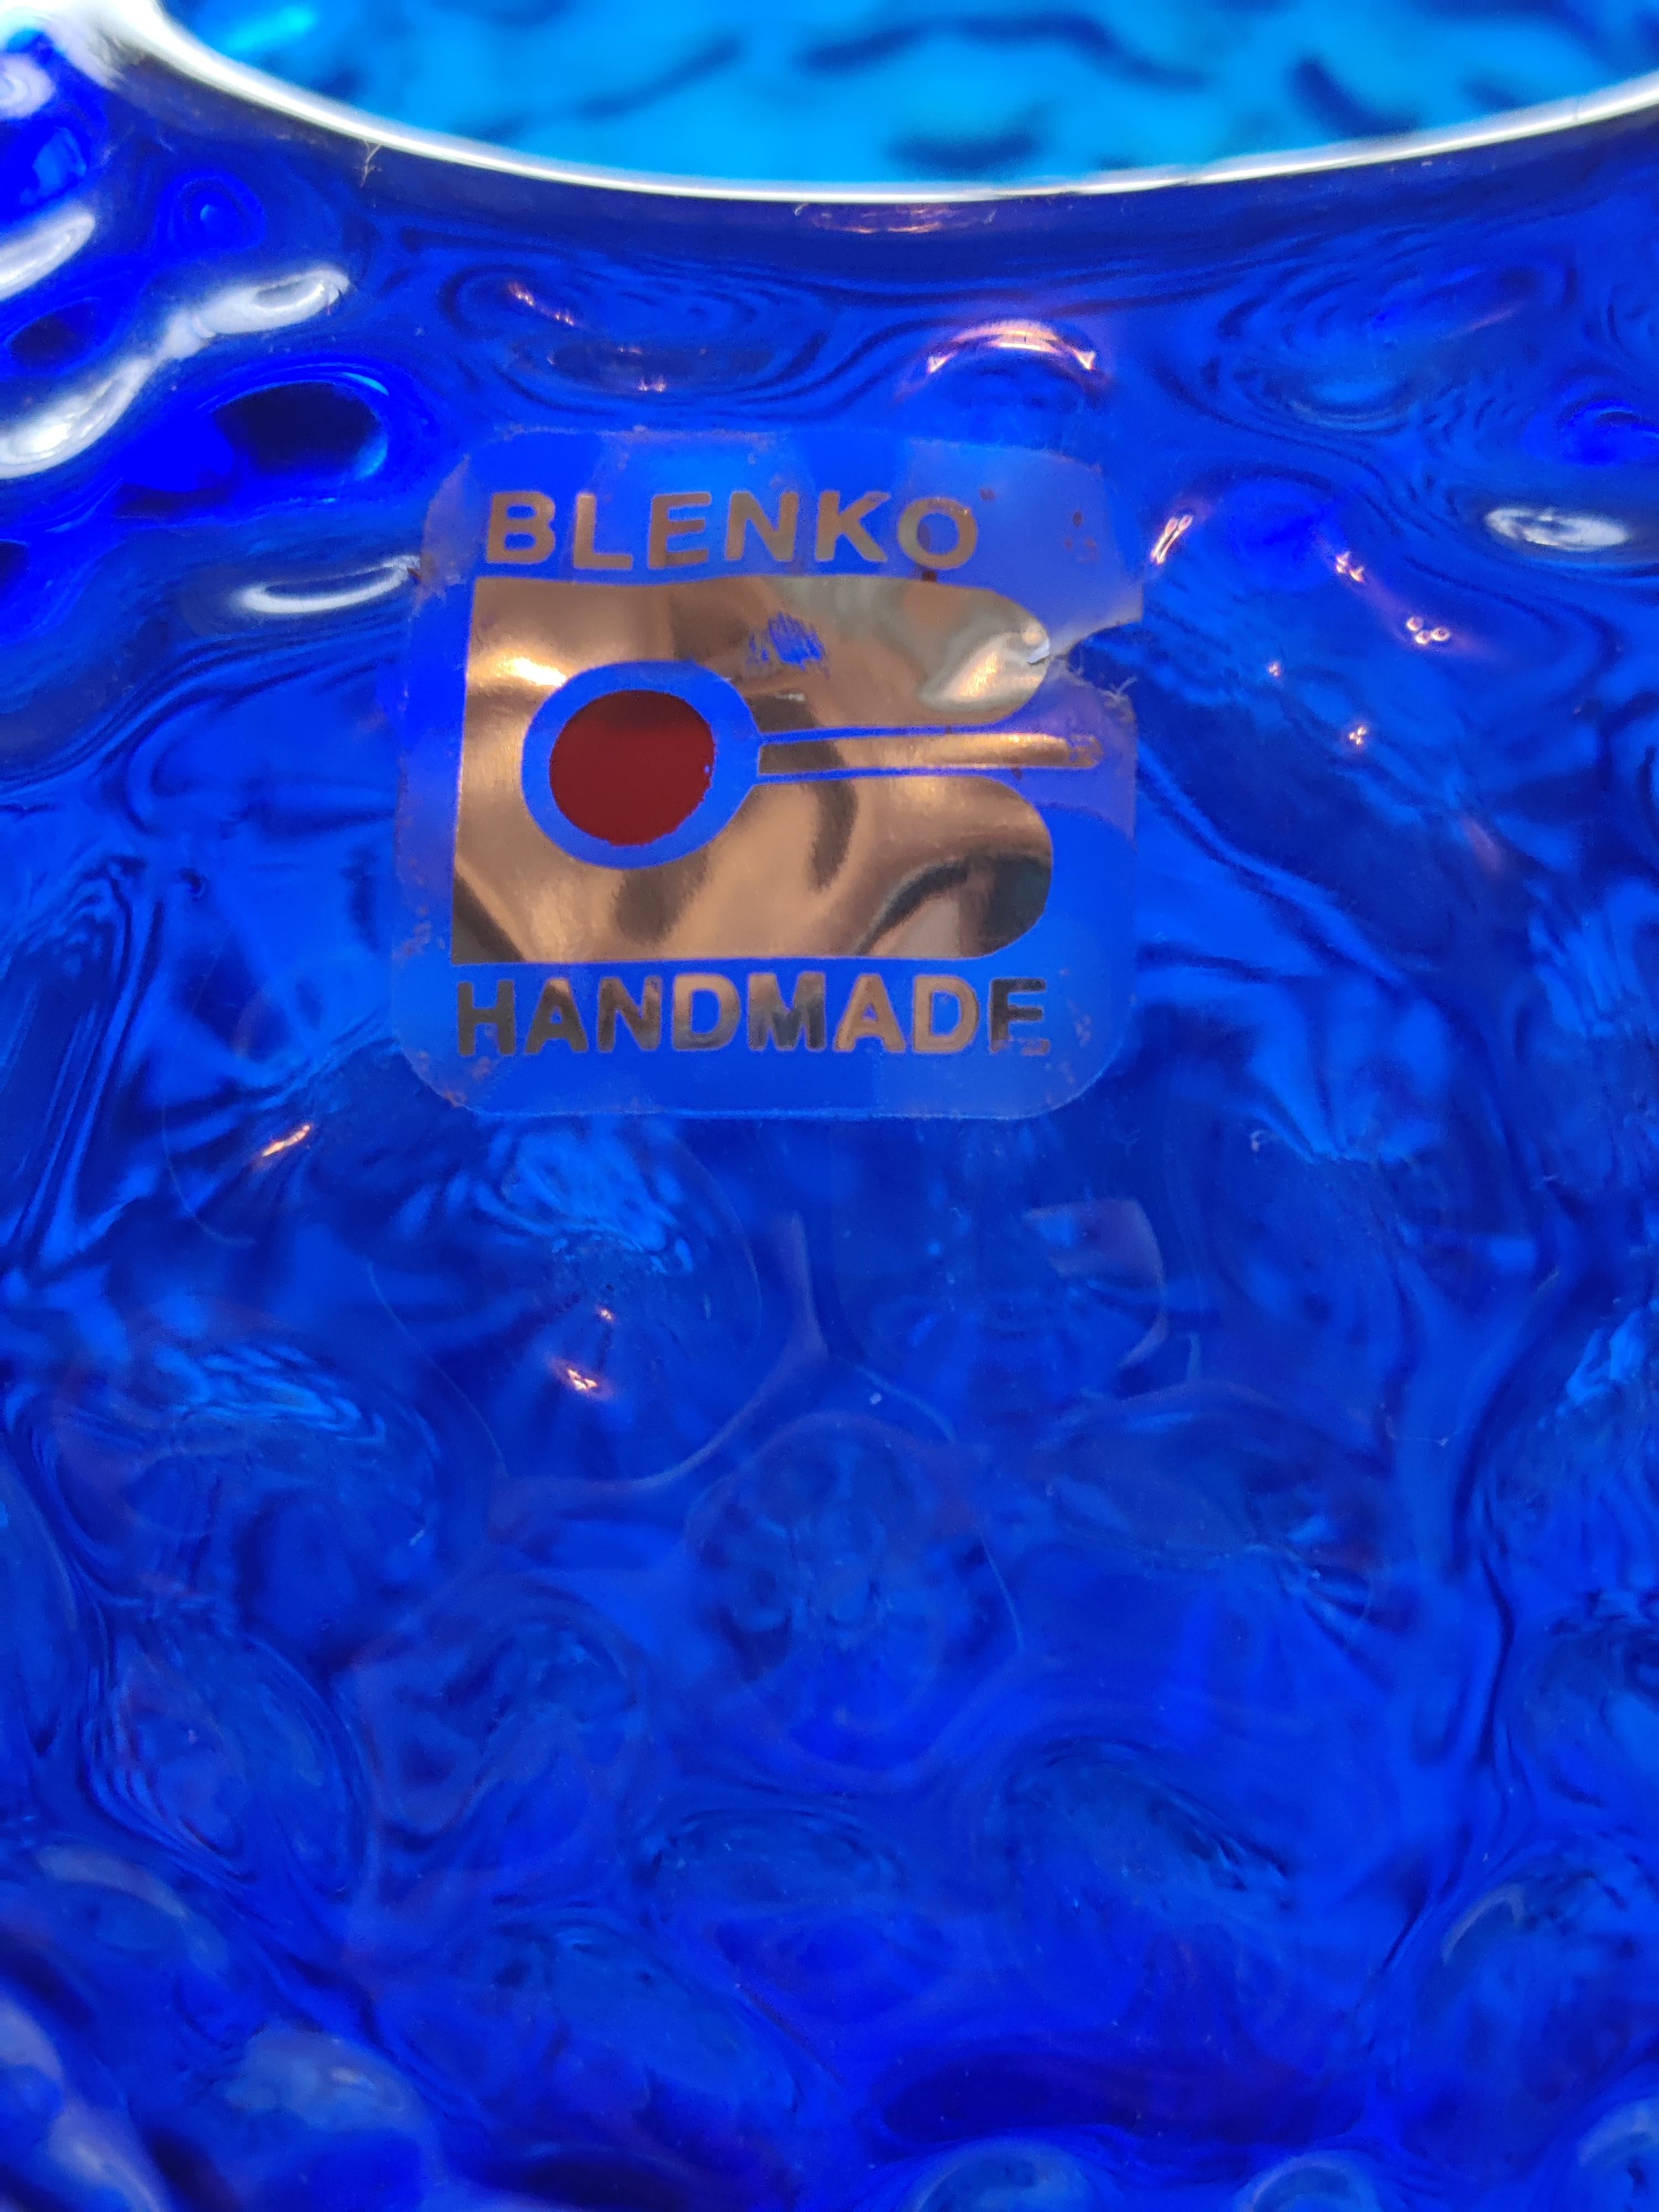 Blenko Handmade Cobalt Blue Vase
Made in Milton, West Virginia. 
Glass is bubble design. 